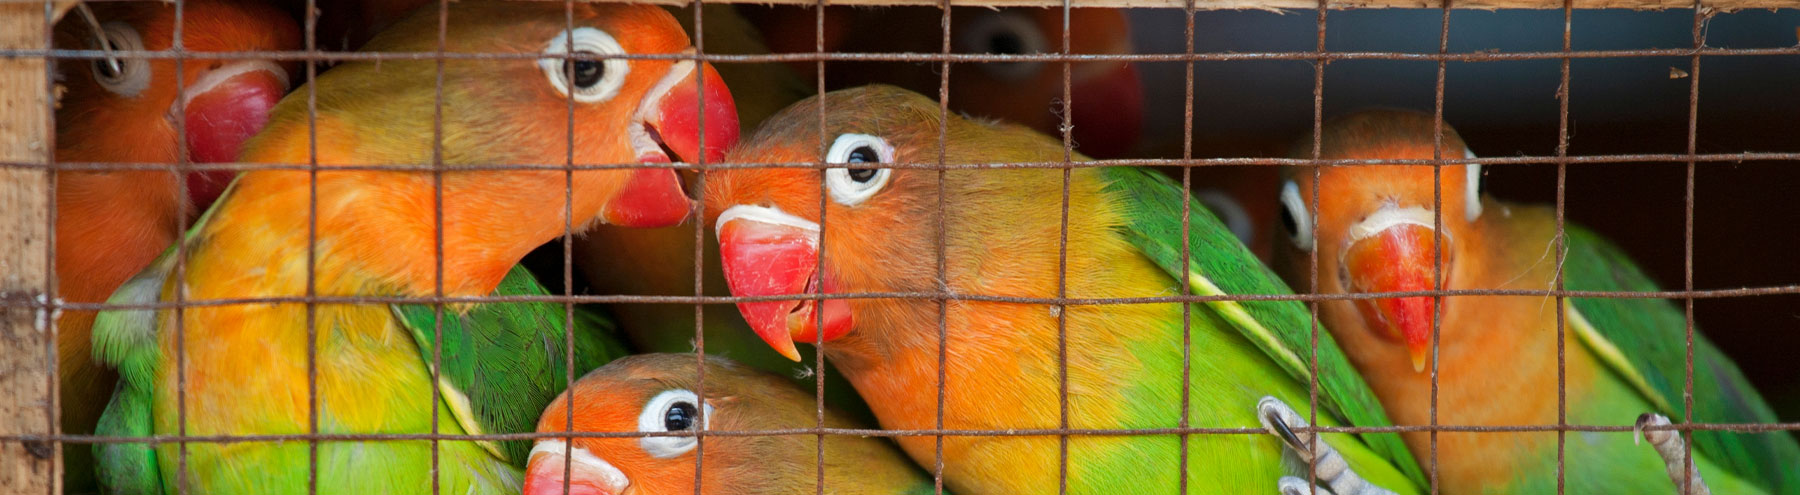 Lovebirds at a bird market ready for shipment to pet stores. Photo: DnDavis/Shutterstock